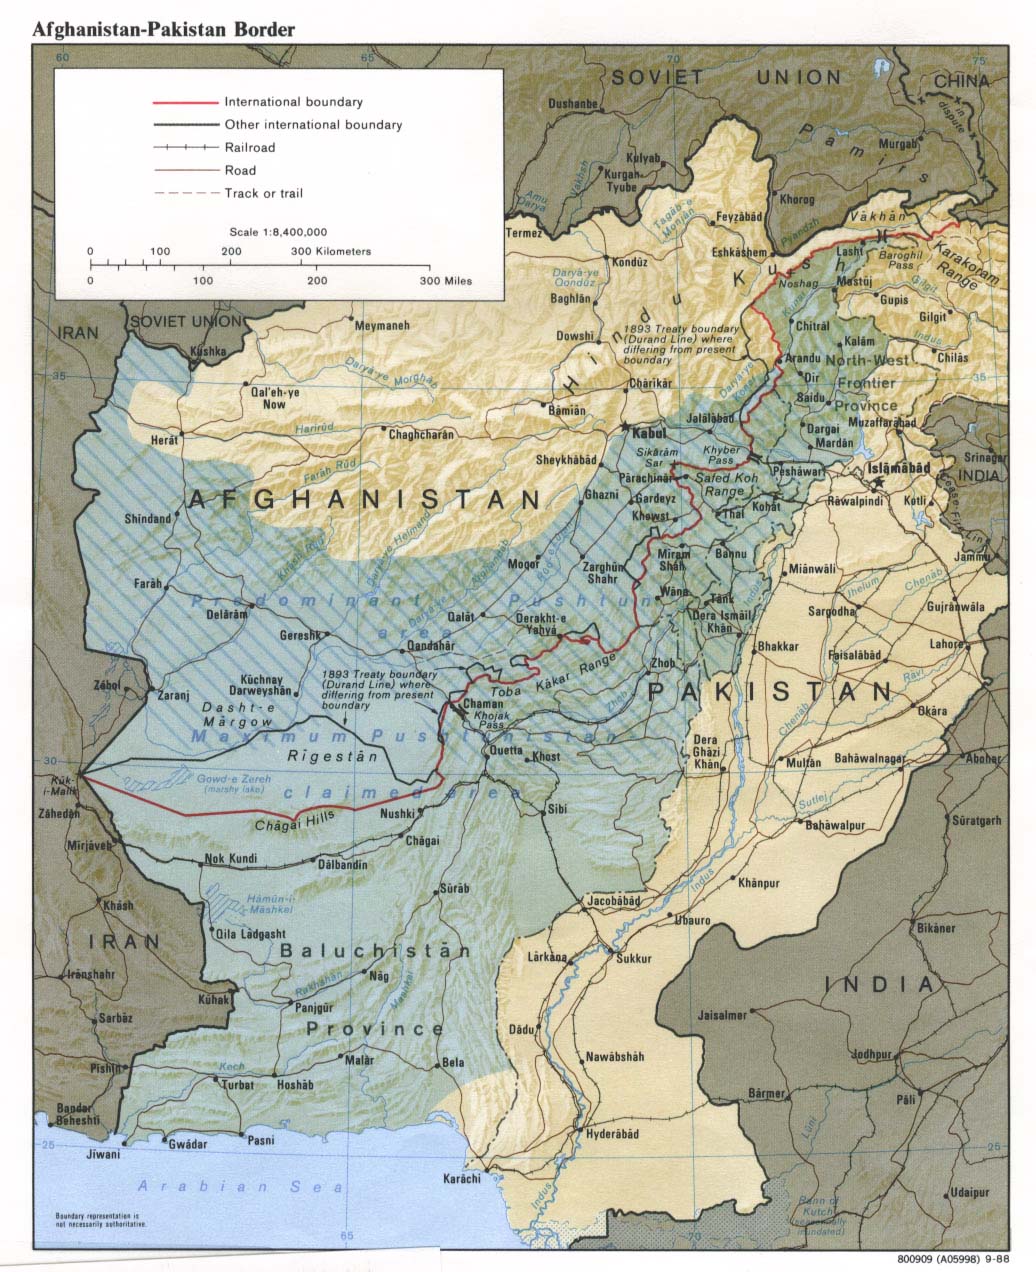 Pakistan---Afghanistan-Border-Pashtunistan-1988.jpg